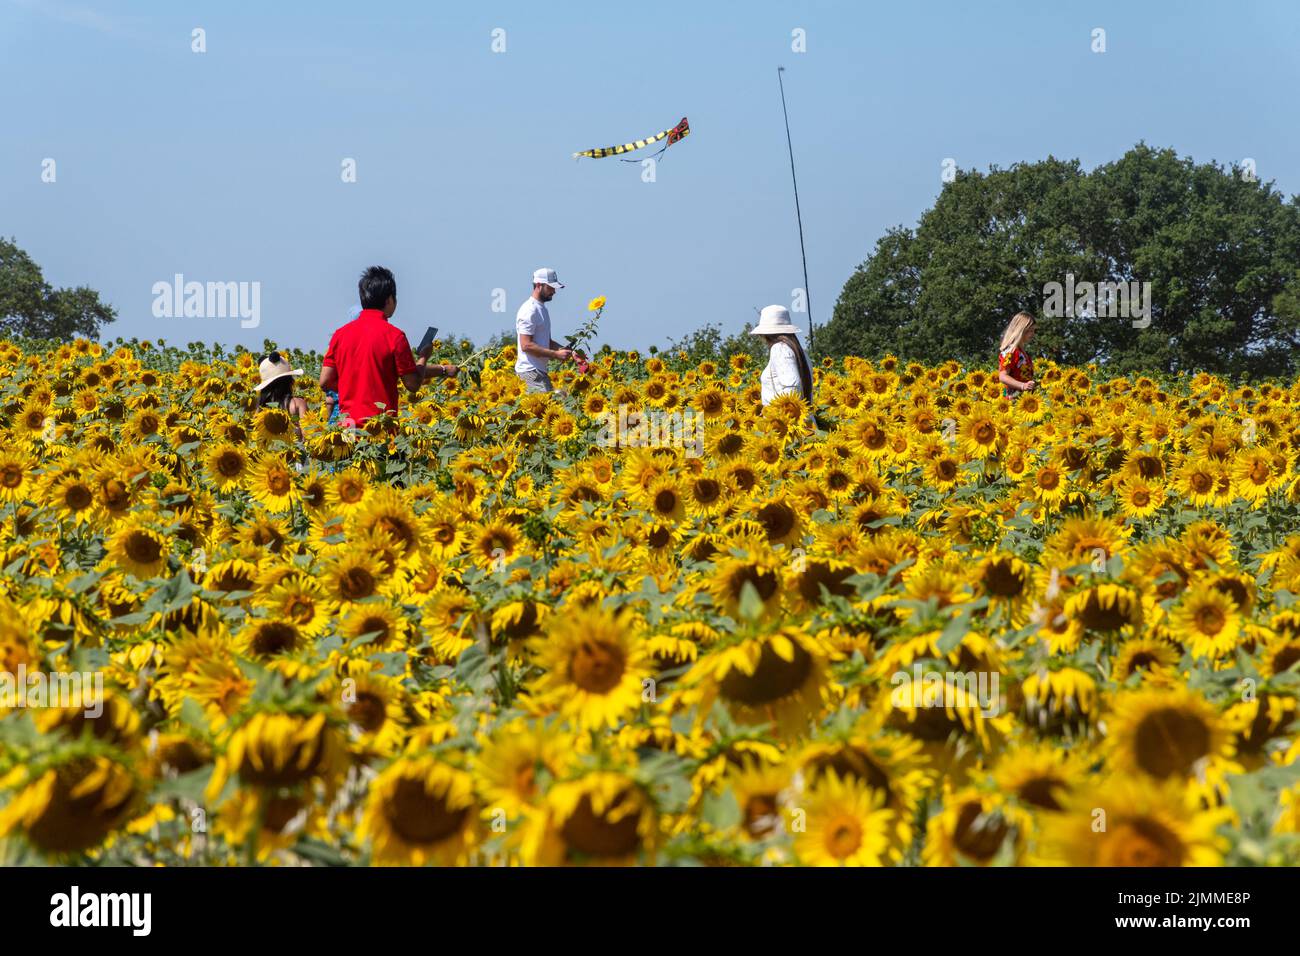 Campo de girasoles durante agosto o verano con la gente que recoge flores, Hampshire, Inglaterra, Reino Unido Foto de stock